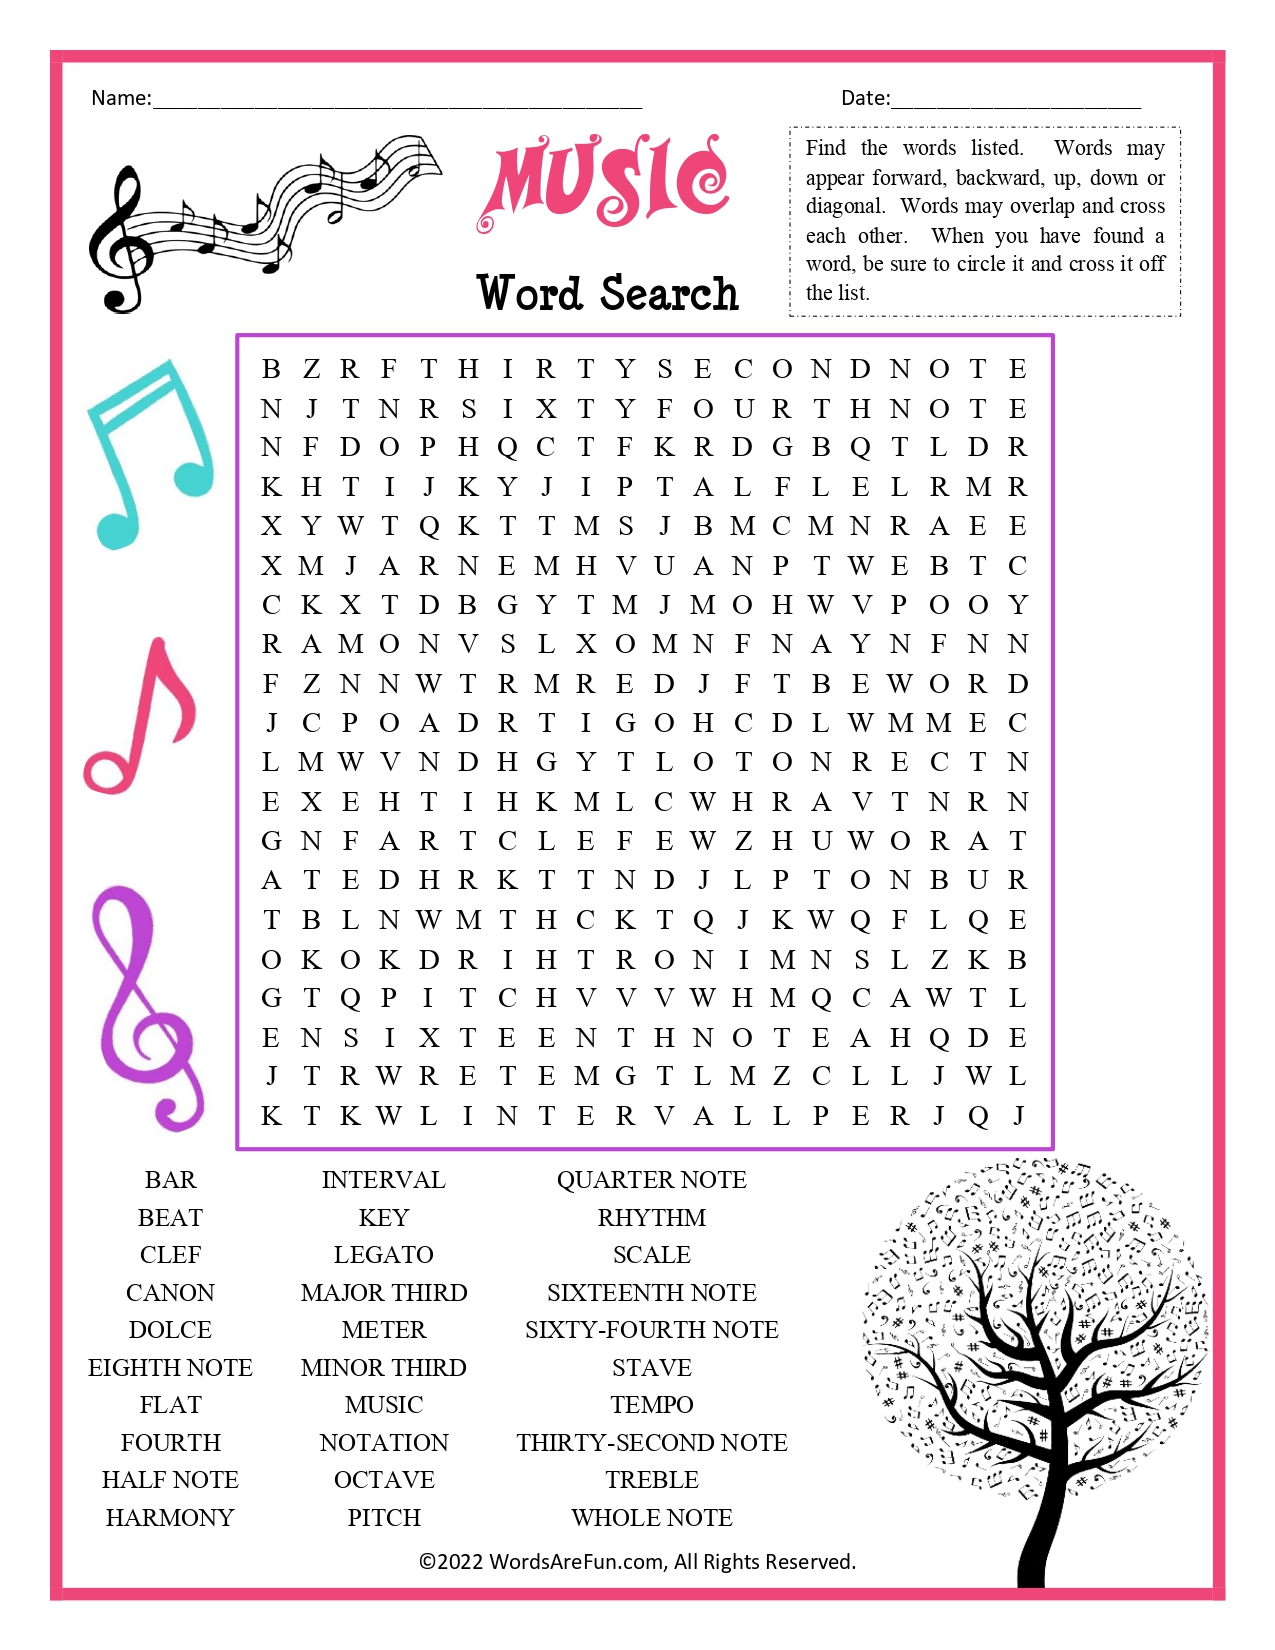 https://www.wordsarefun.com/images/music-word-search-for-kids.jpg